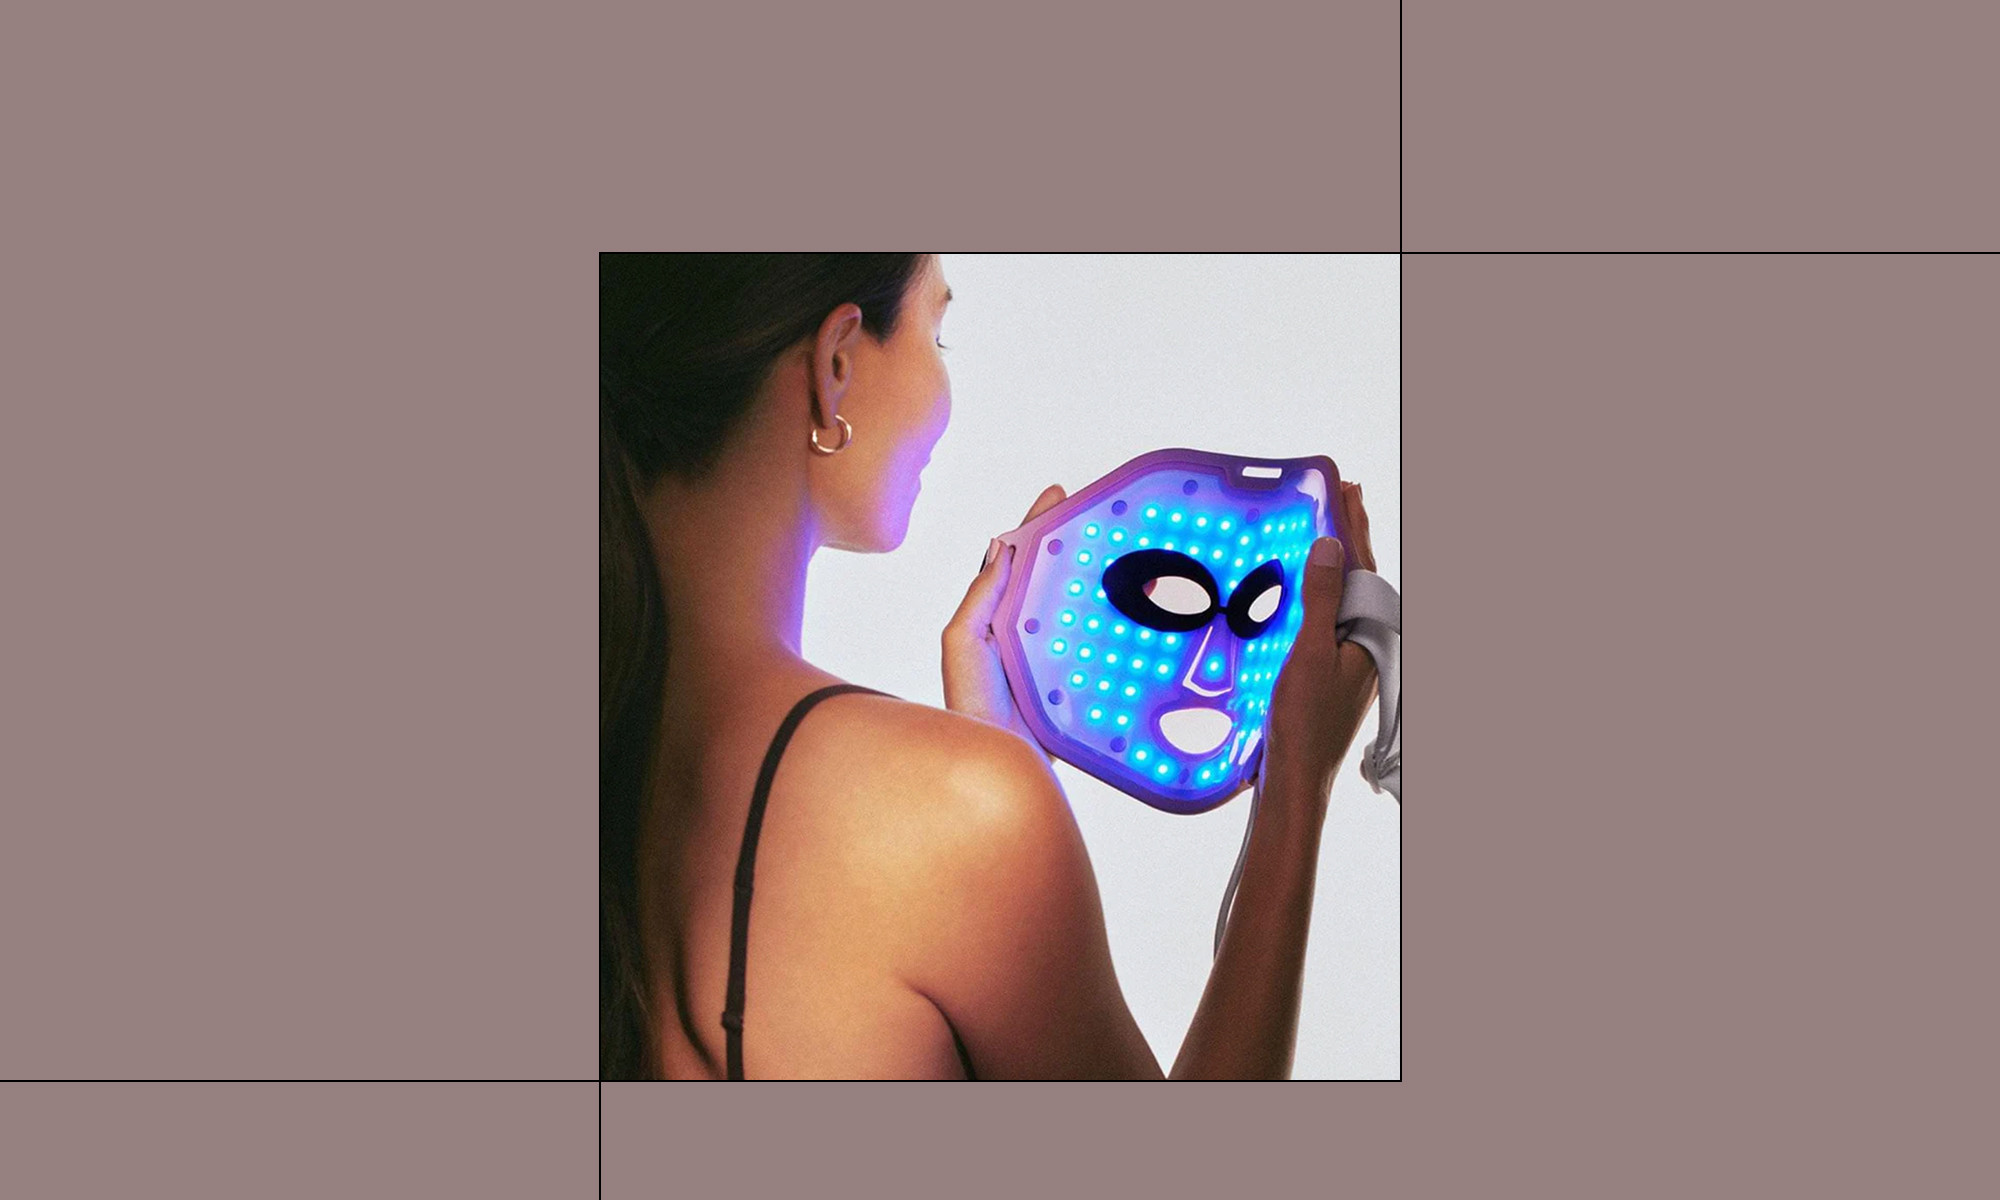 Solawave LED Face Mask Save 40% On This Prime Day Deal mindbodygreen photo image